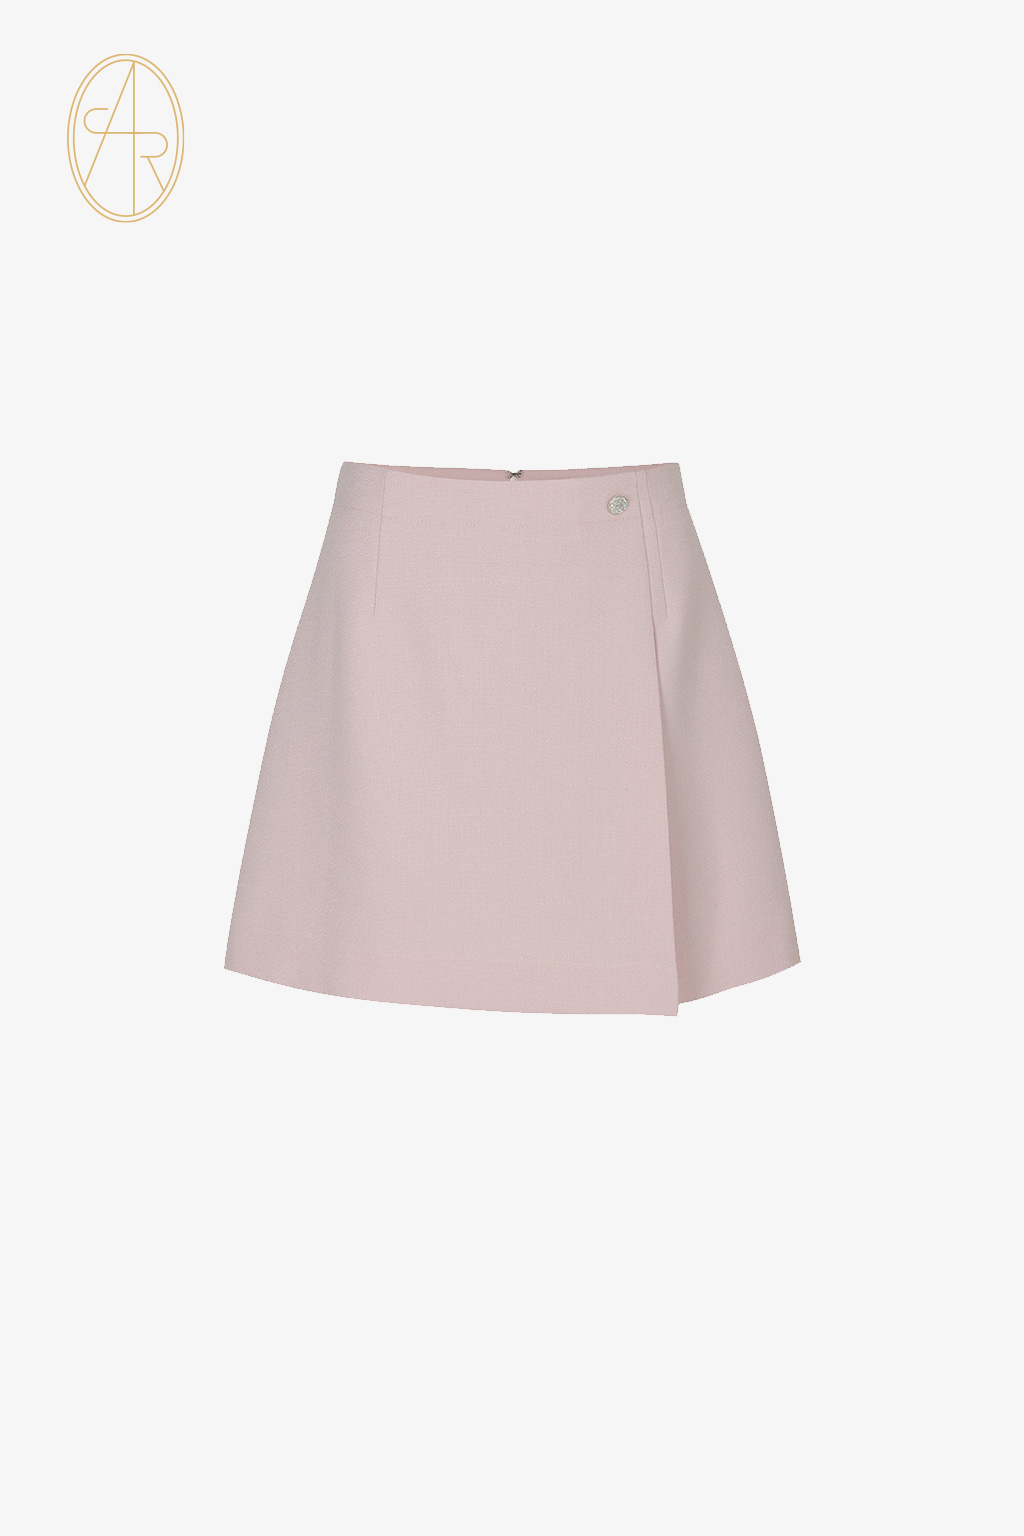 [exclusive] mondriaan glitter skirt